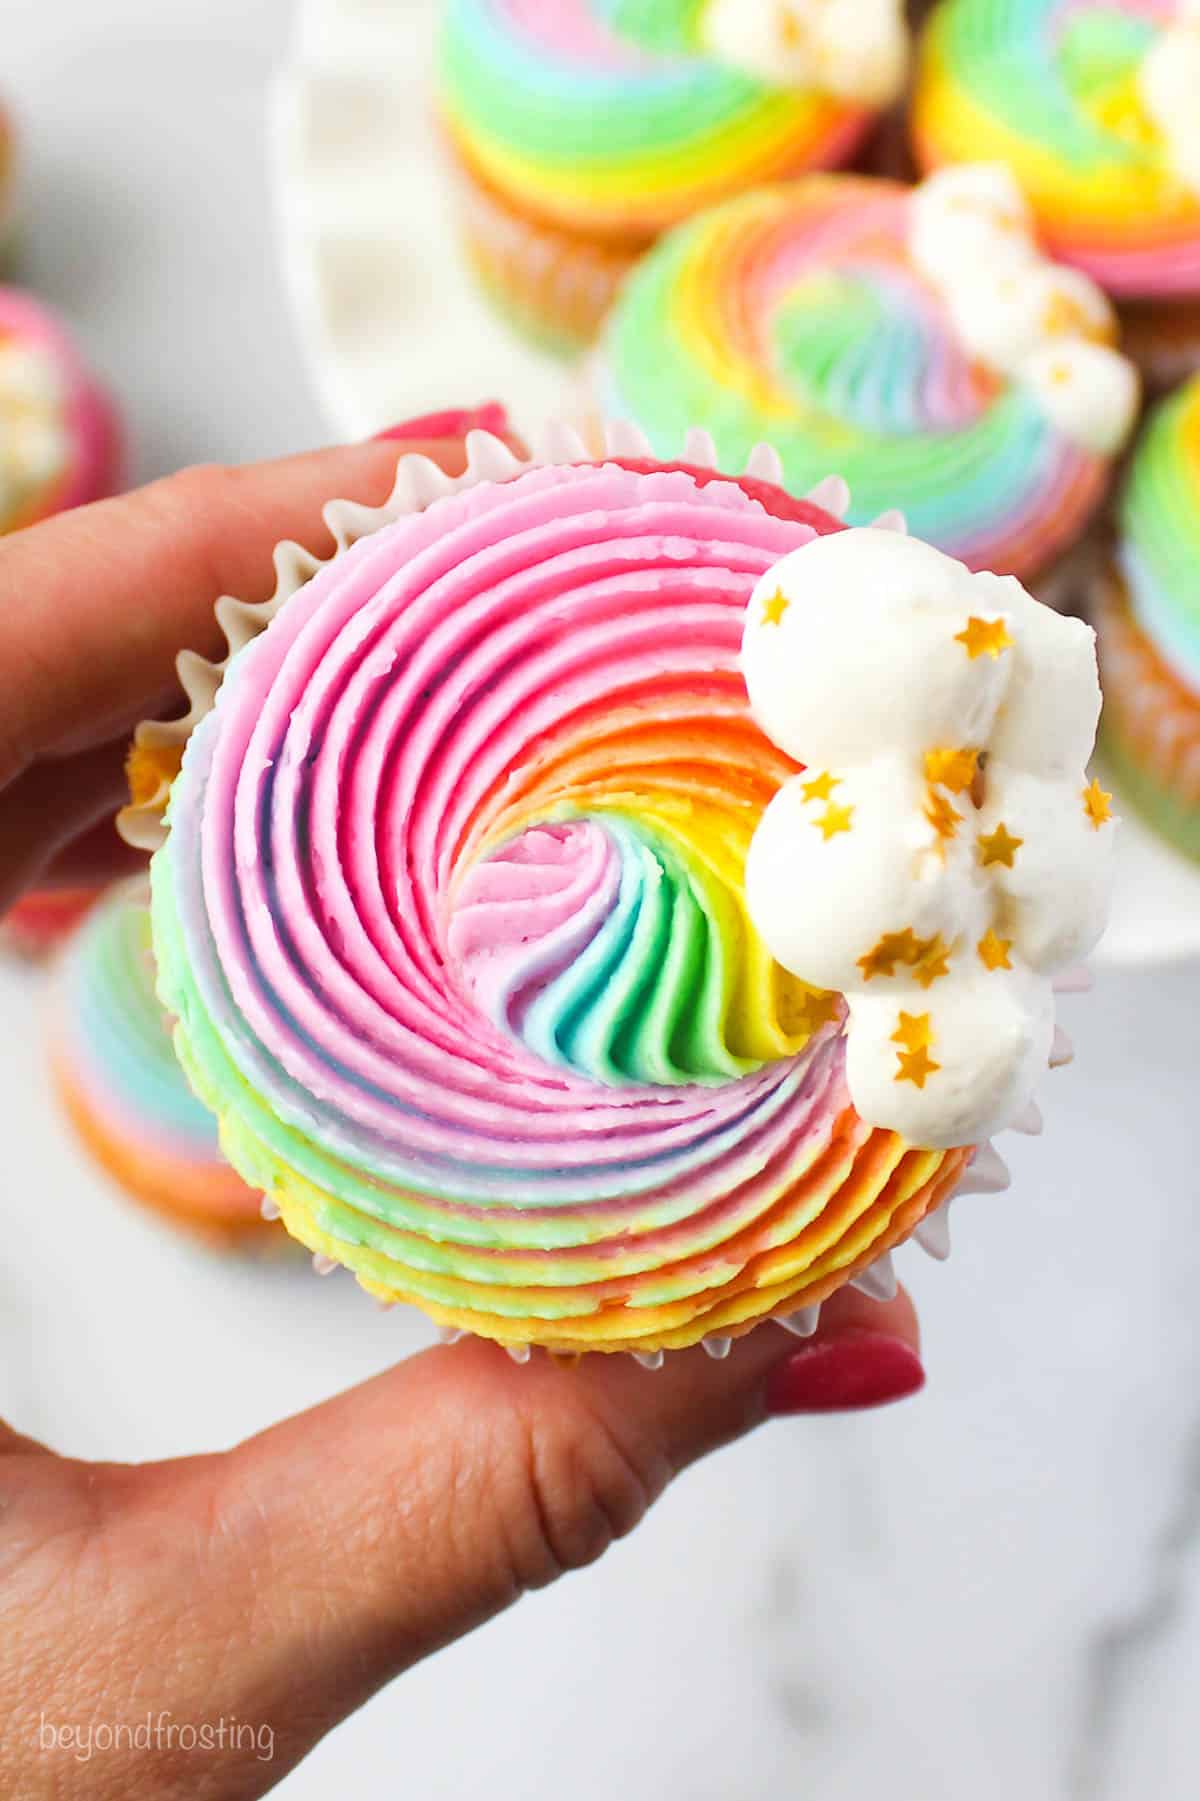 A hand holding a rainbow cupcake